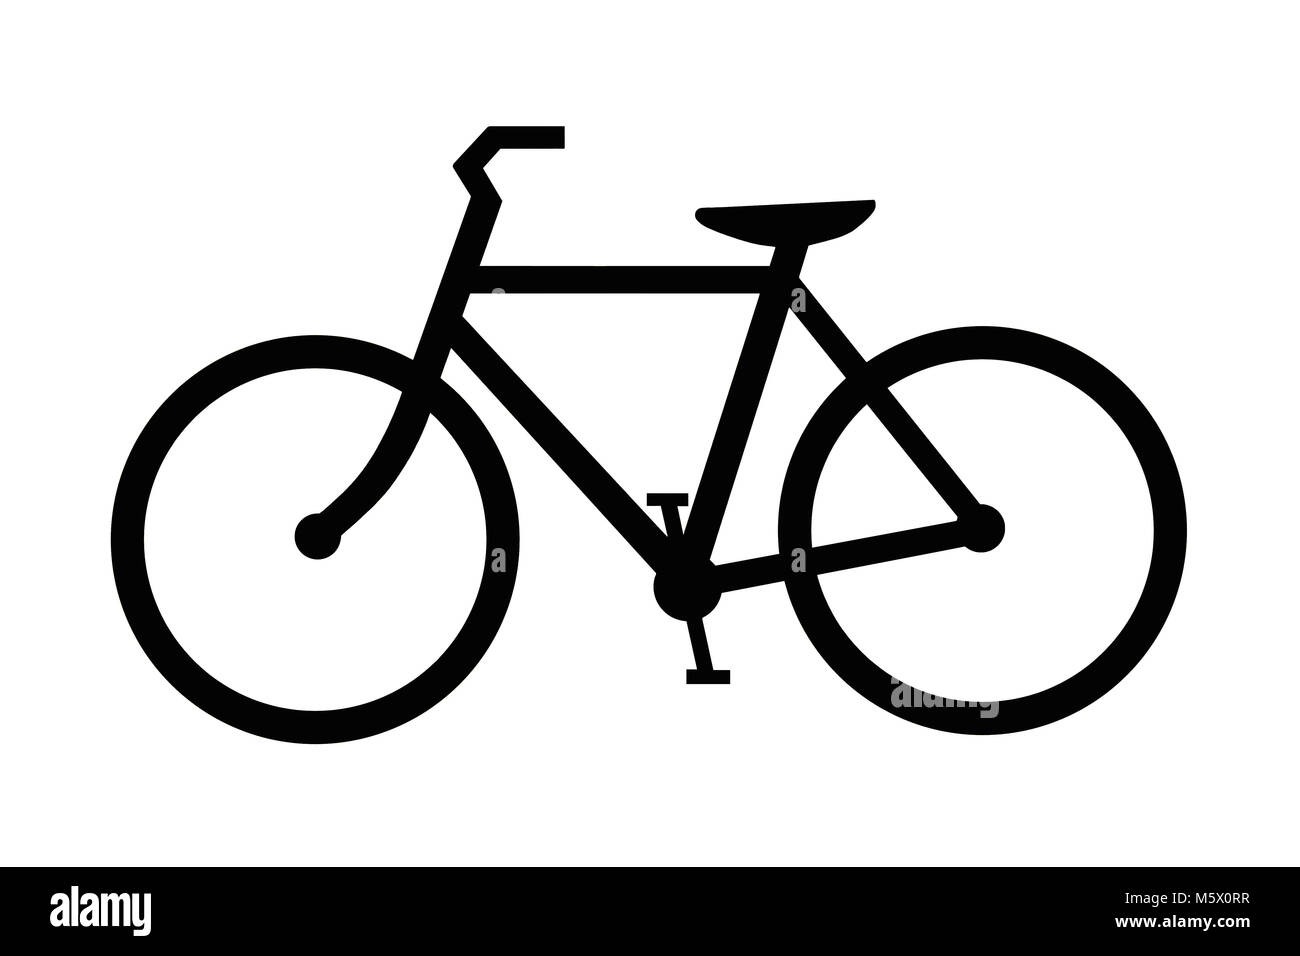 Bike Cyclist Riding Bicycle Silhouette By Krisdog GraphicRiver | lupon ...